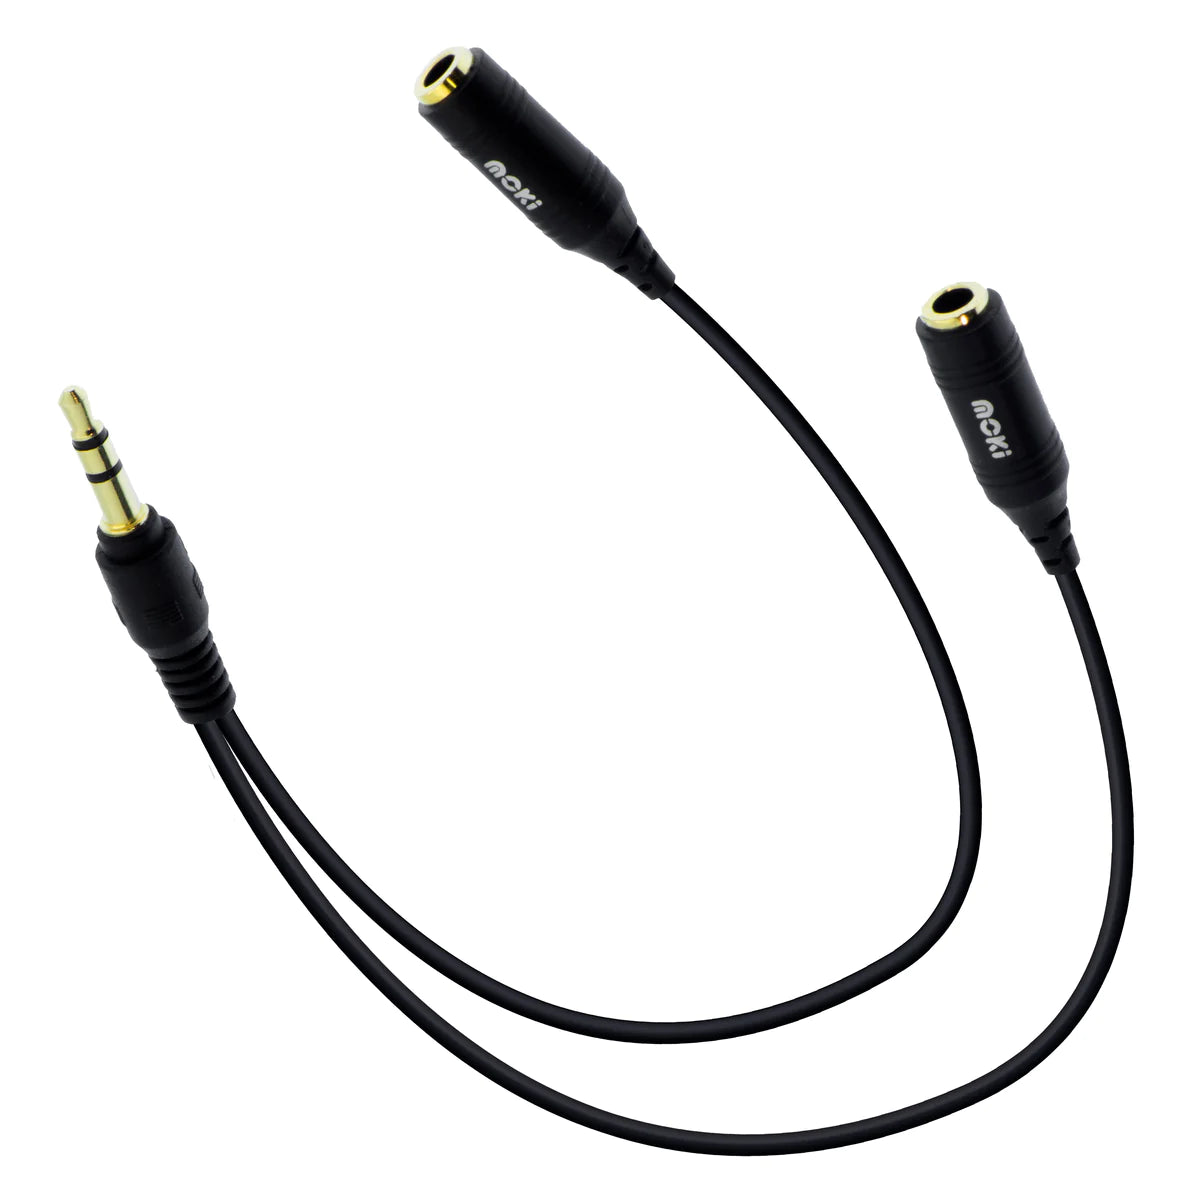 Moki Splitter Cable 3.5mm to 3.5mm